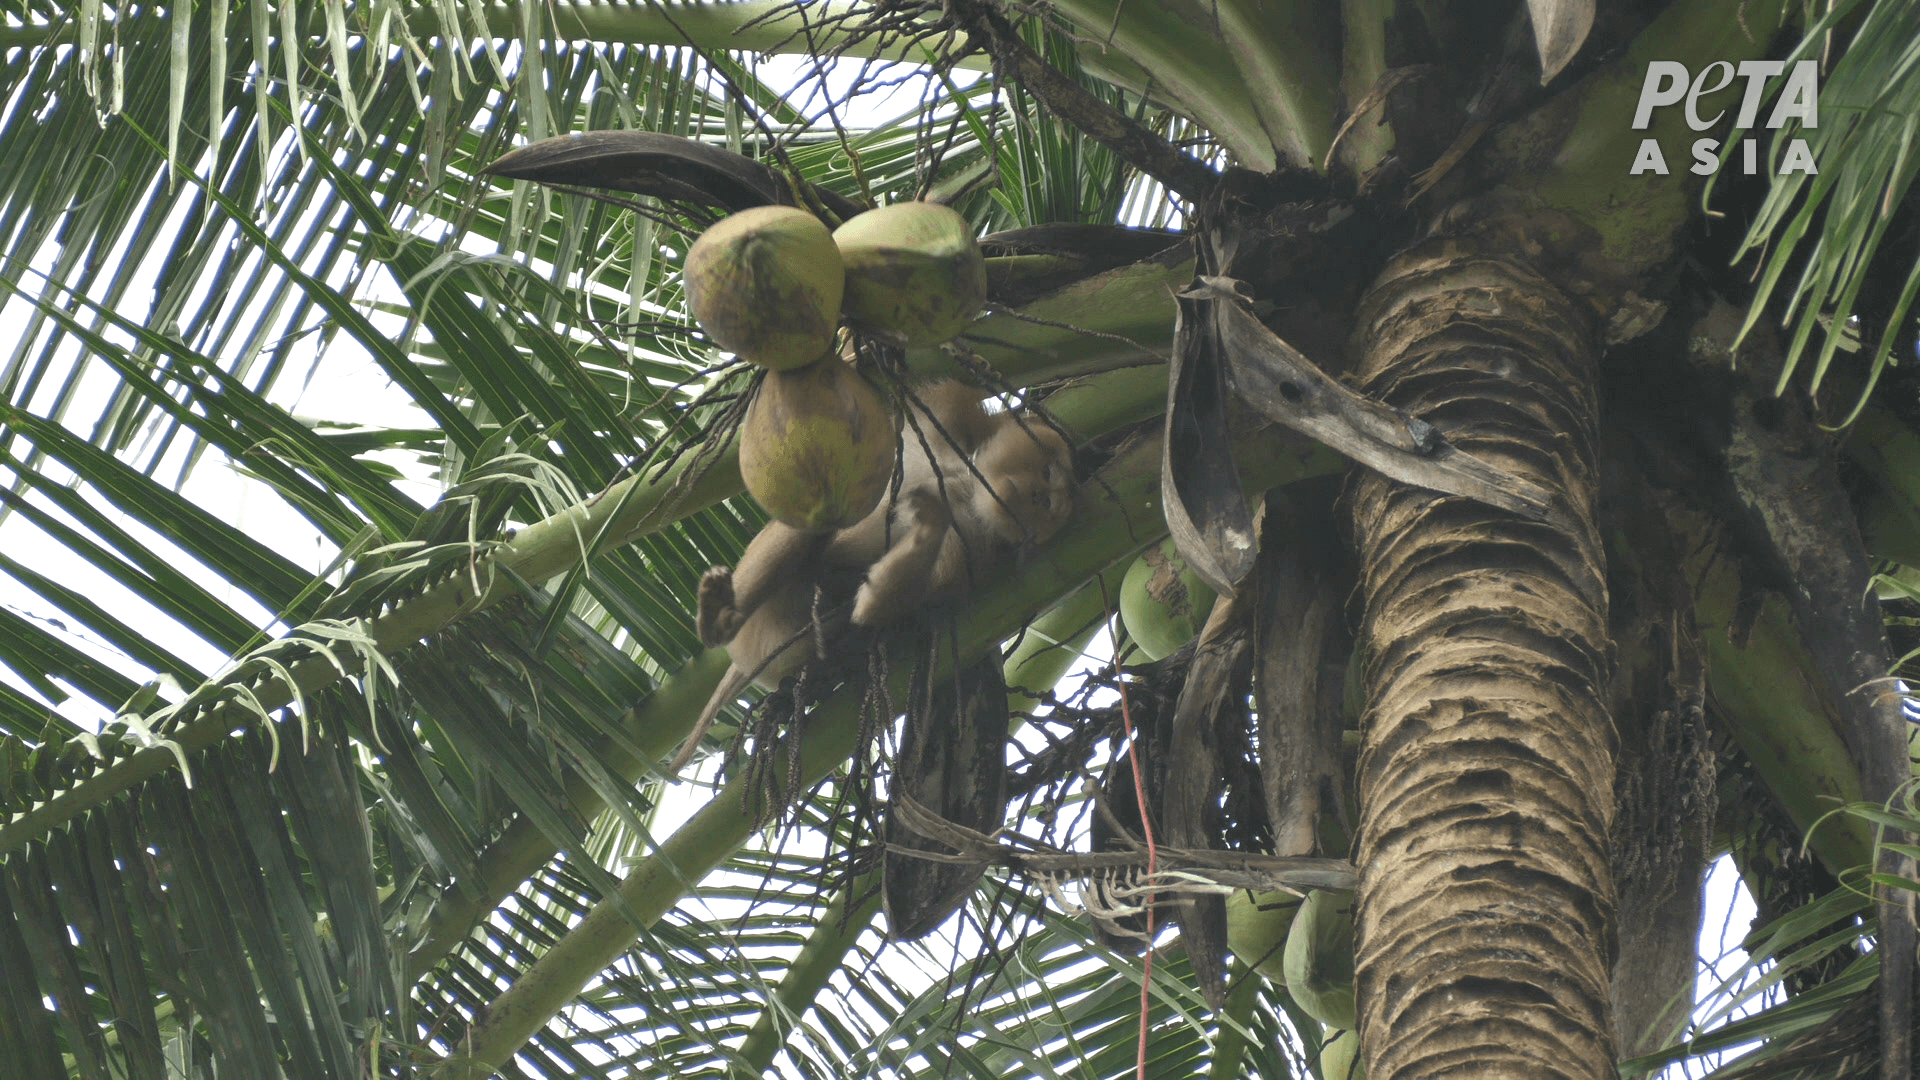 https://investigaciones.petalatino.com/wp-content/uploads/2022/10/VEG-Thai-Coconut-Industry-Monkey-Monkey-picking-coconuts-2.png